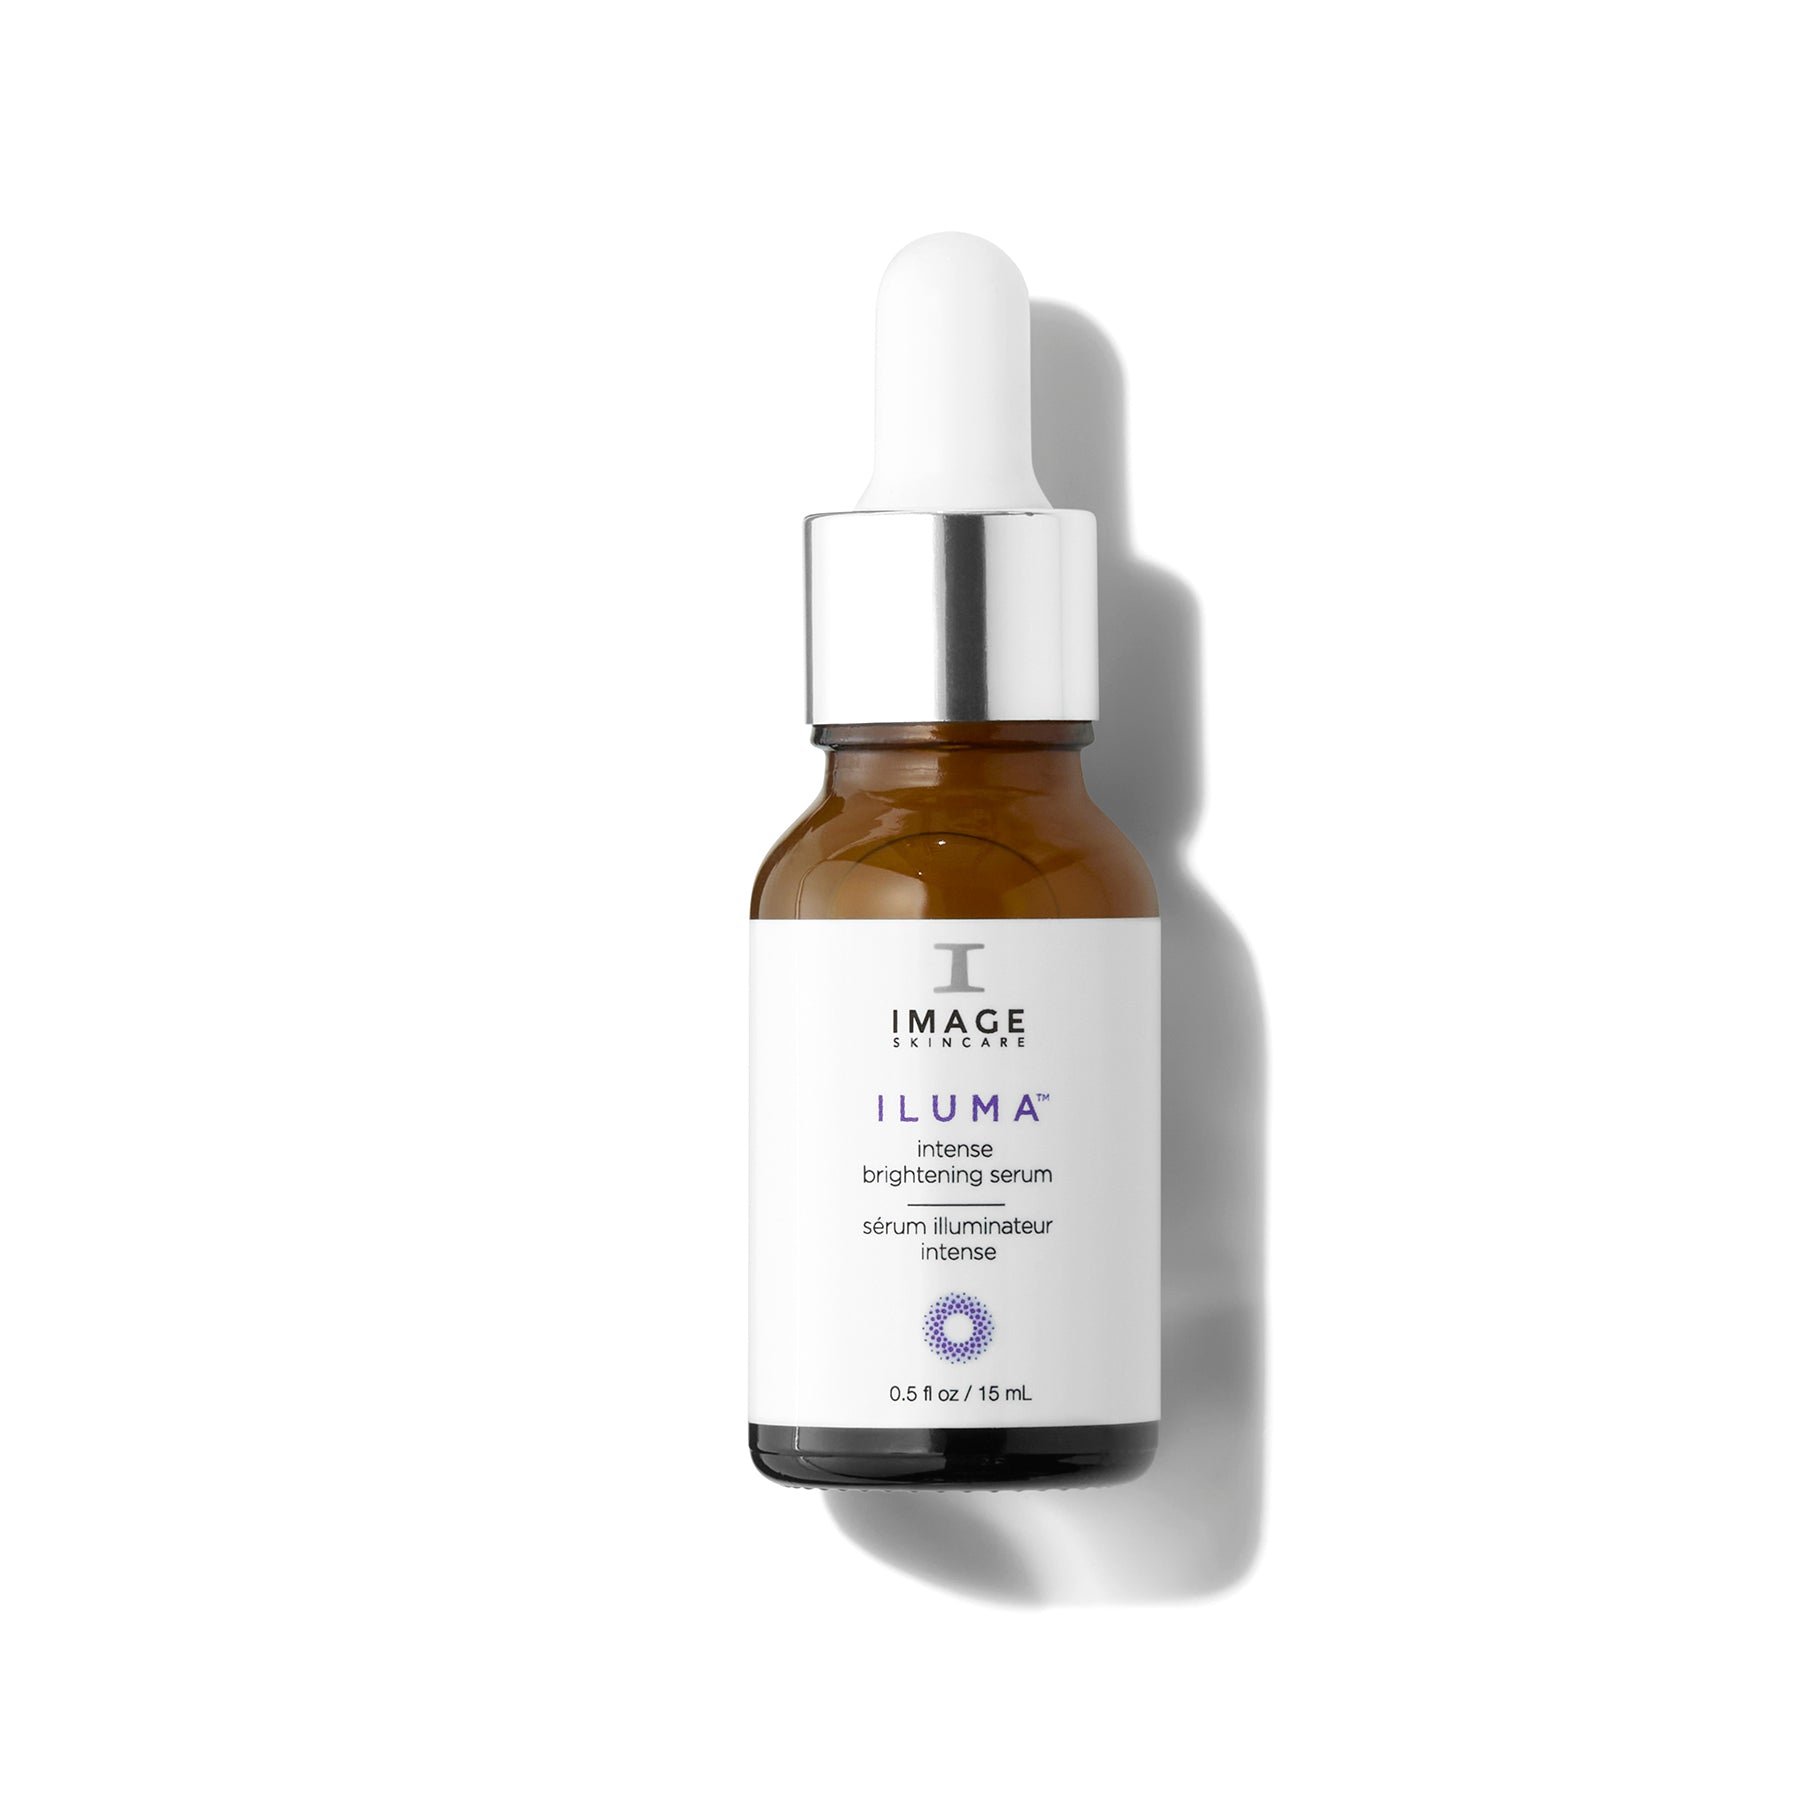 ILUMA® intense brightening serum discovery-size